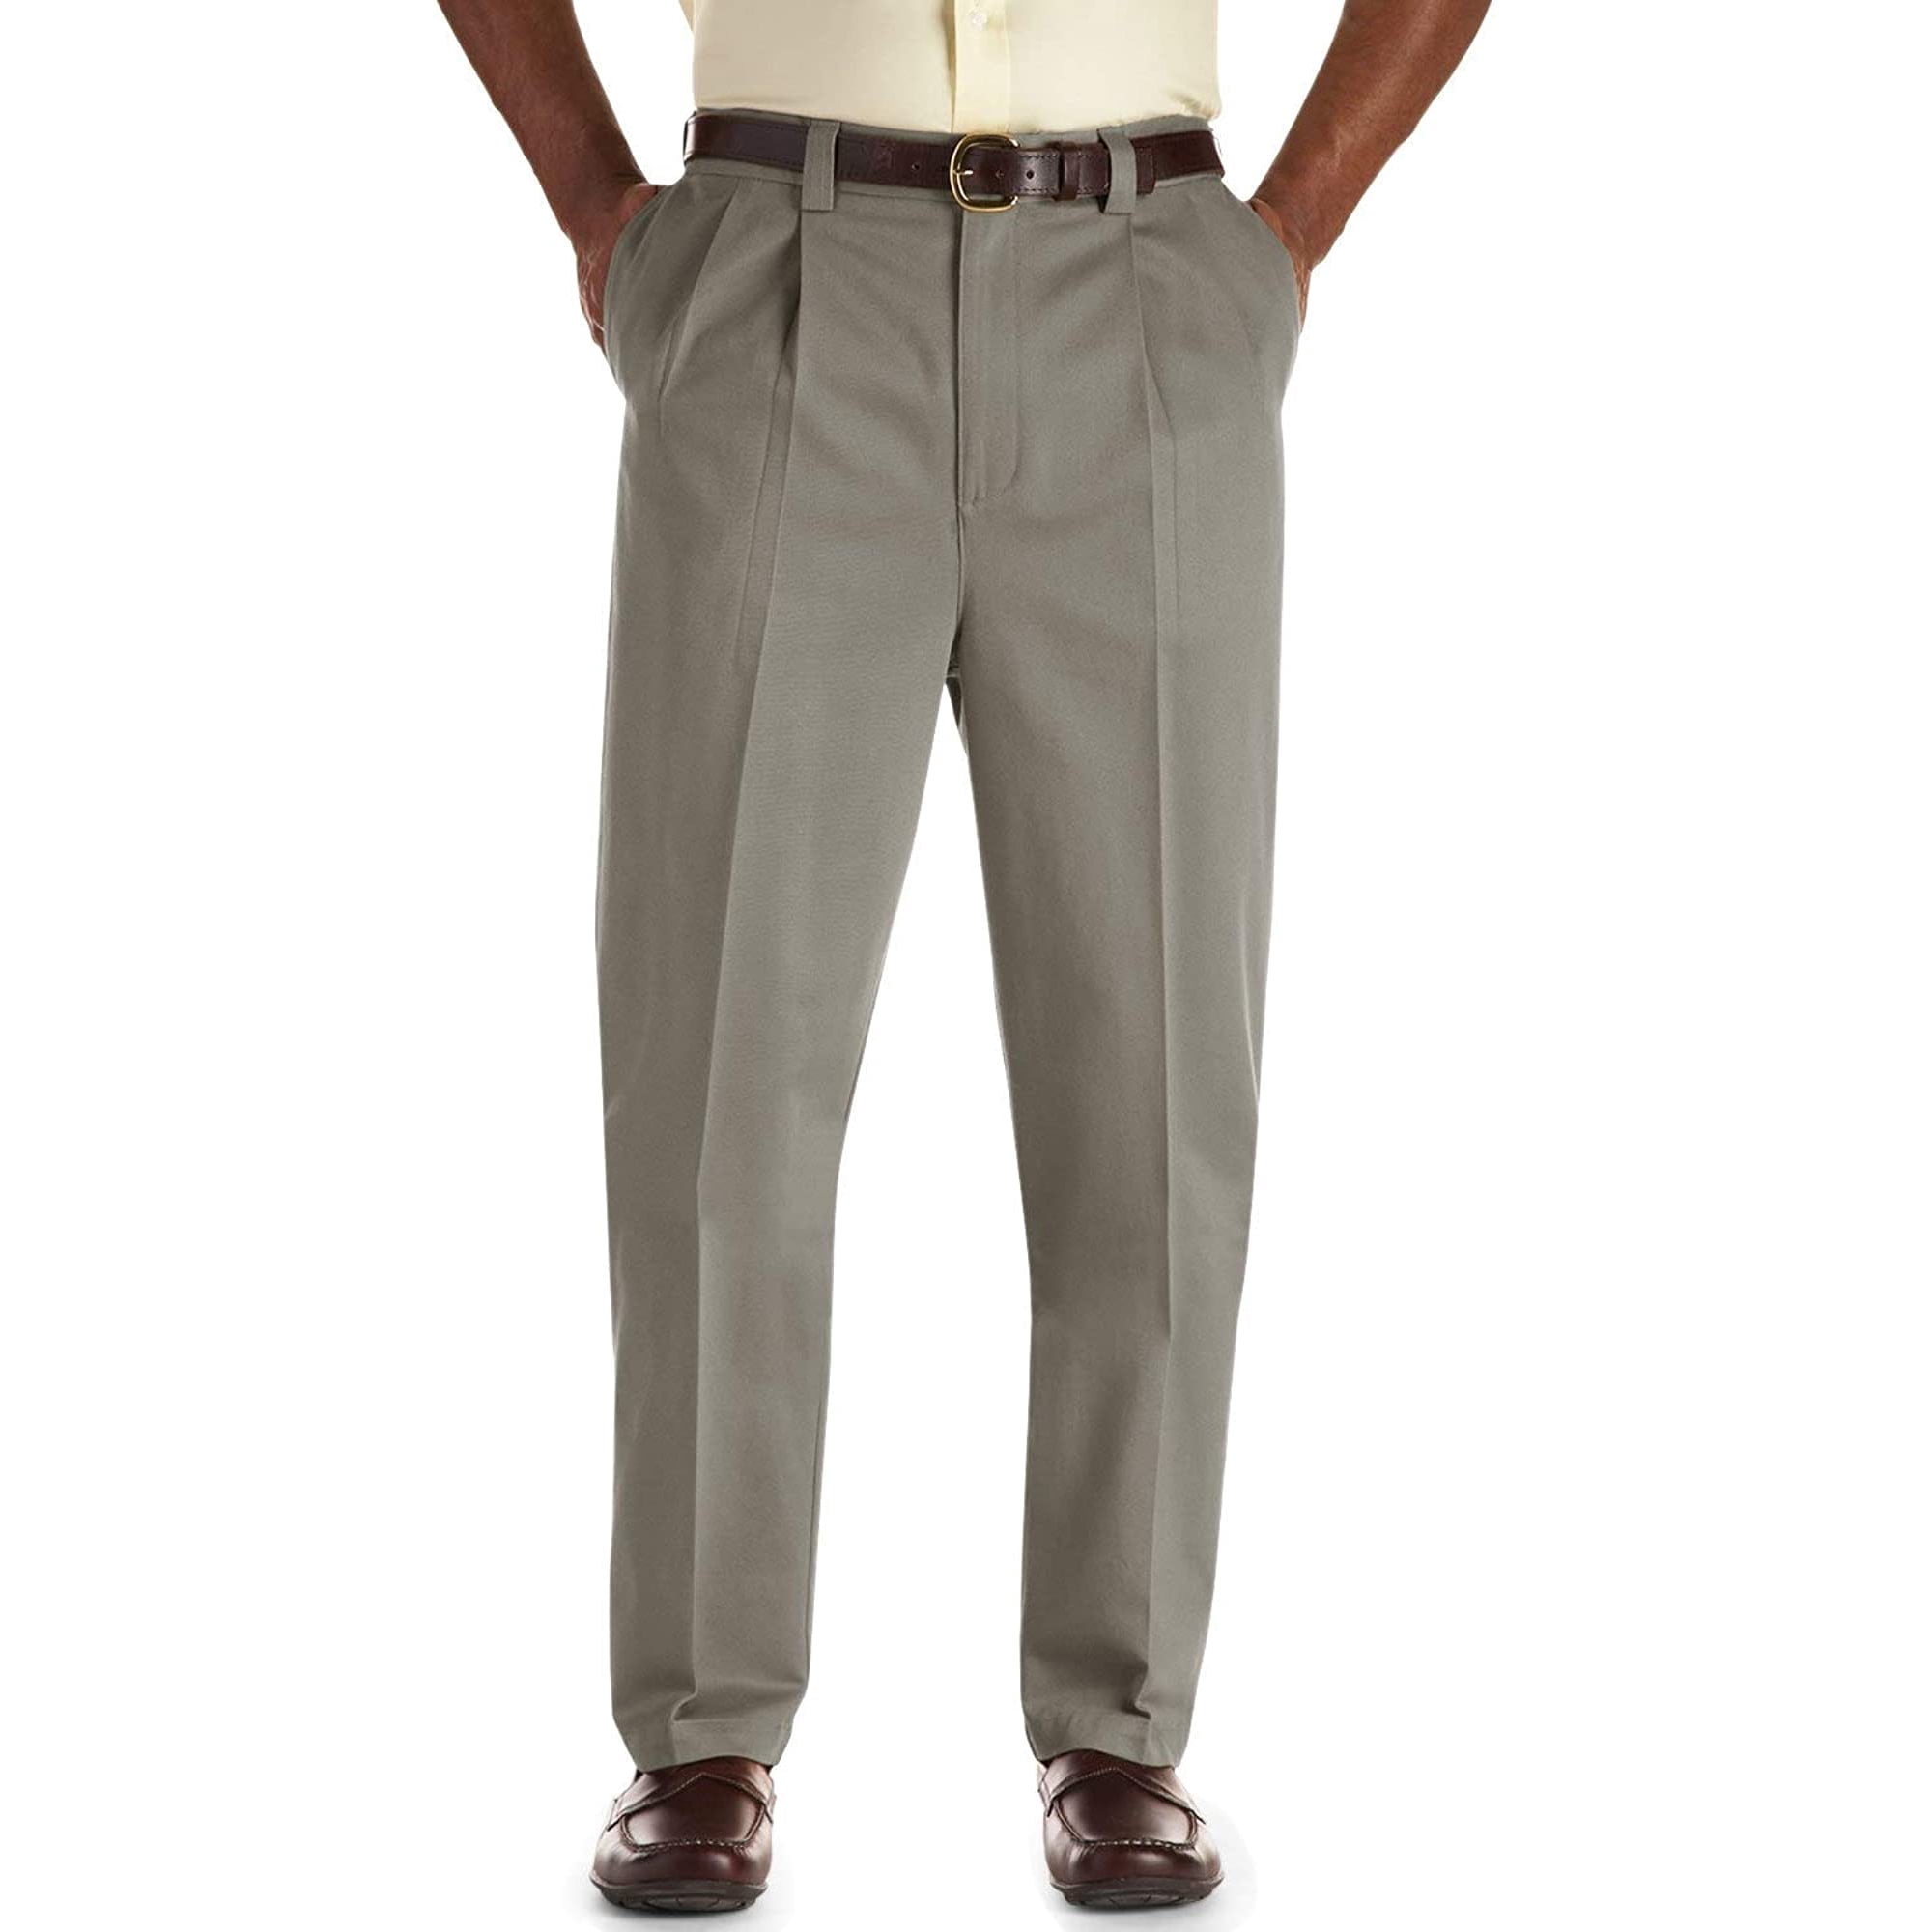 Olive Oak Hill by DXL Big and Tall Pleated Premium Stretch Twill Pants 54R 30